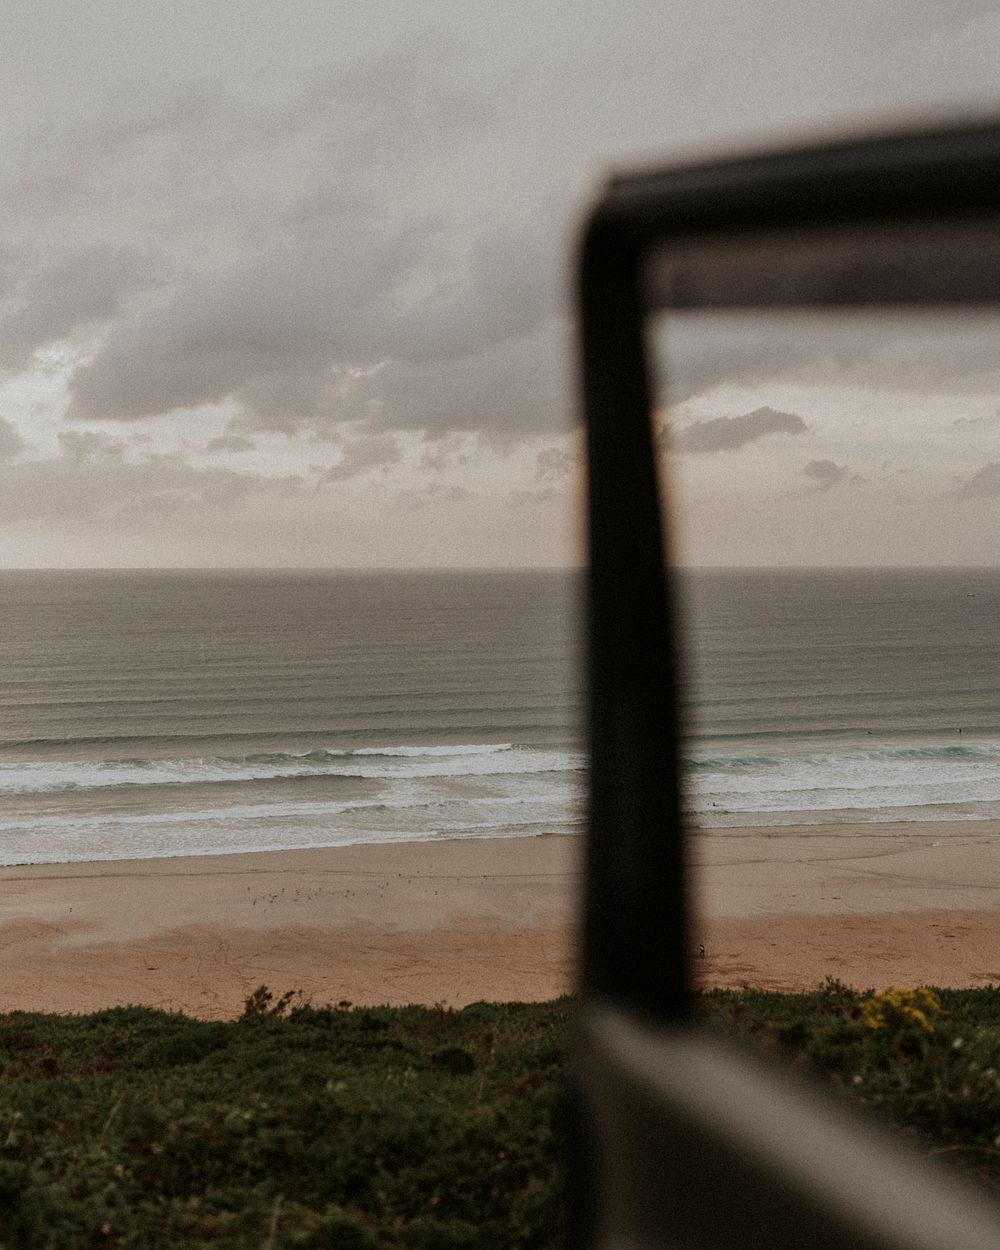 Ocean view from a car